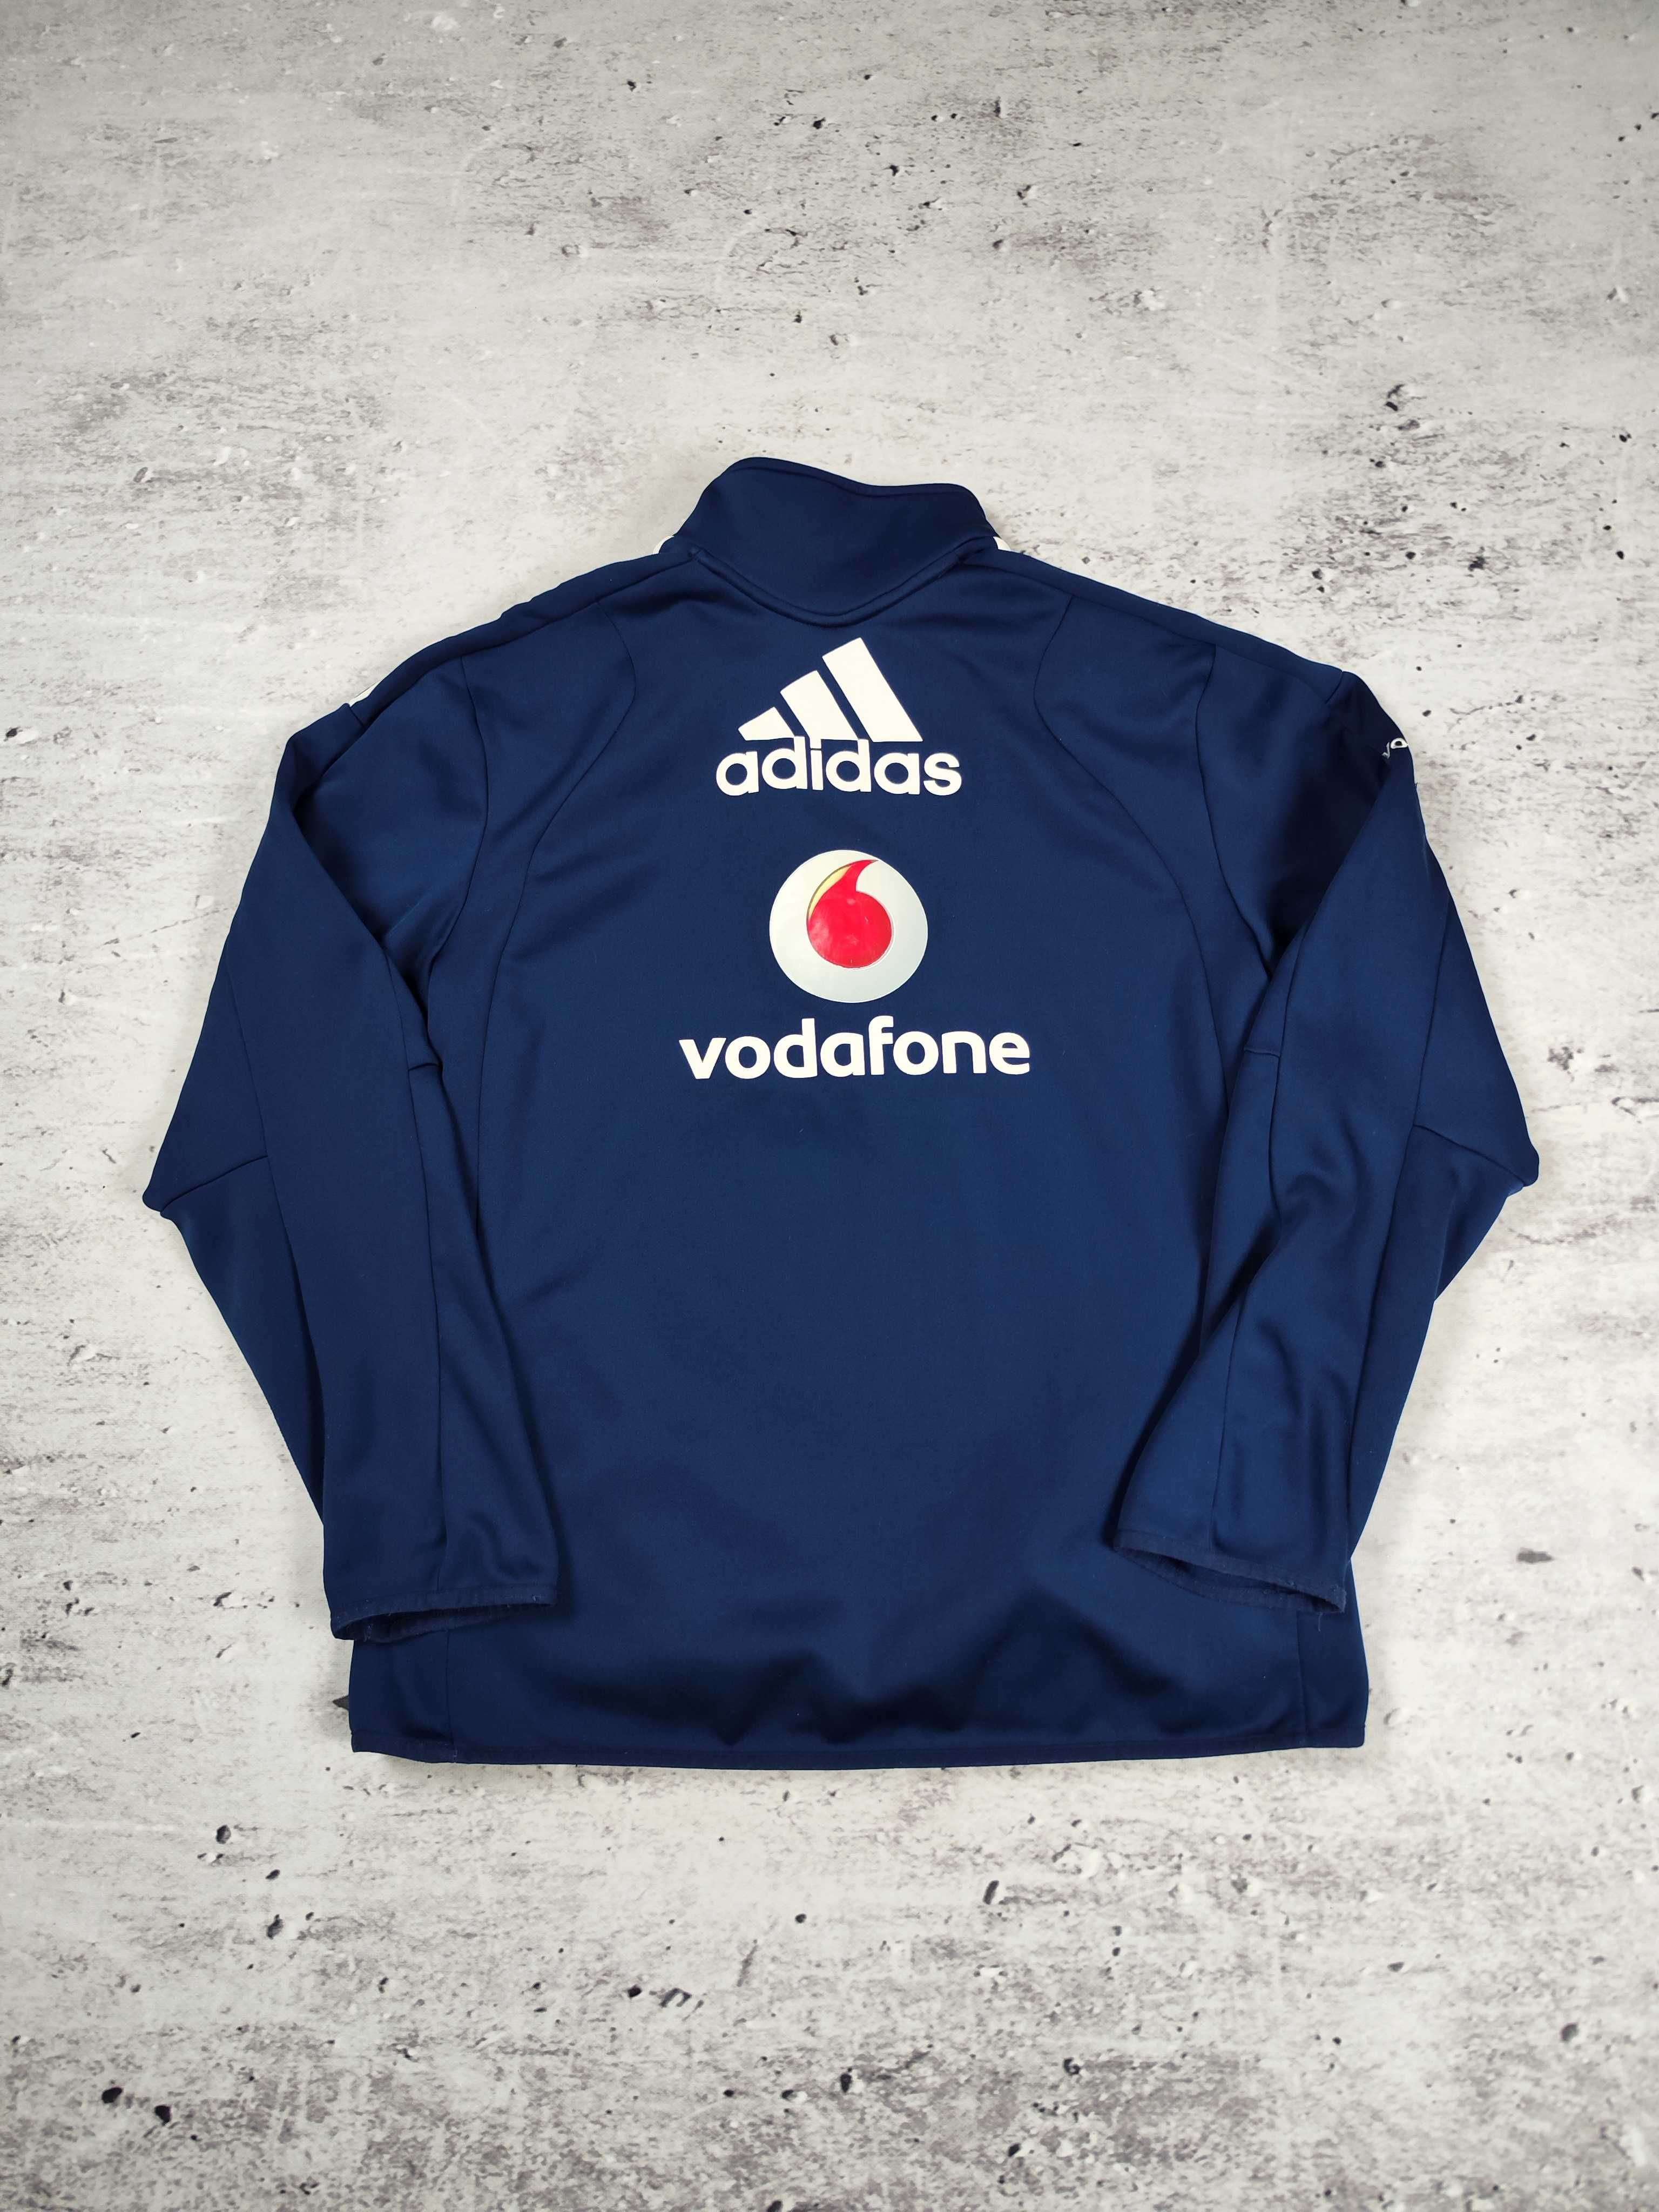 Bluza Adidas sportowa Vodafone piłkarska rozpinana 1/4 r. L